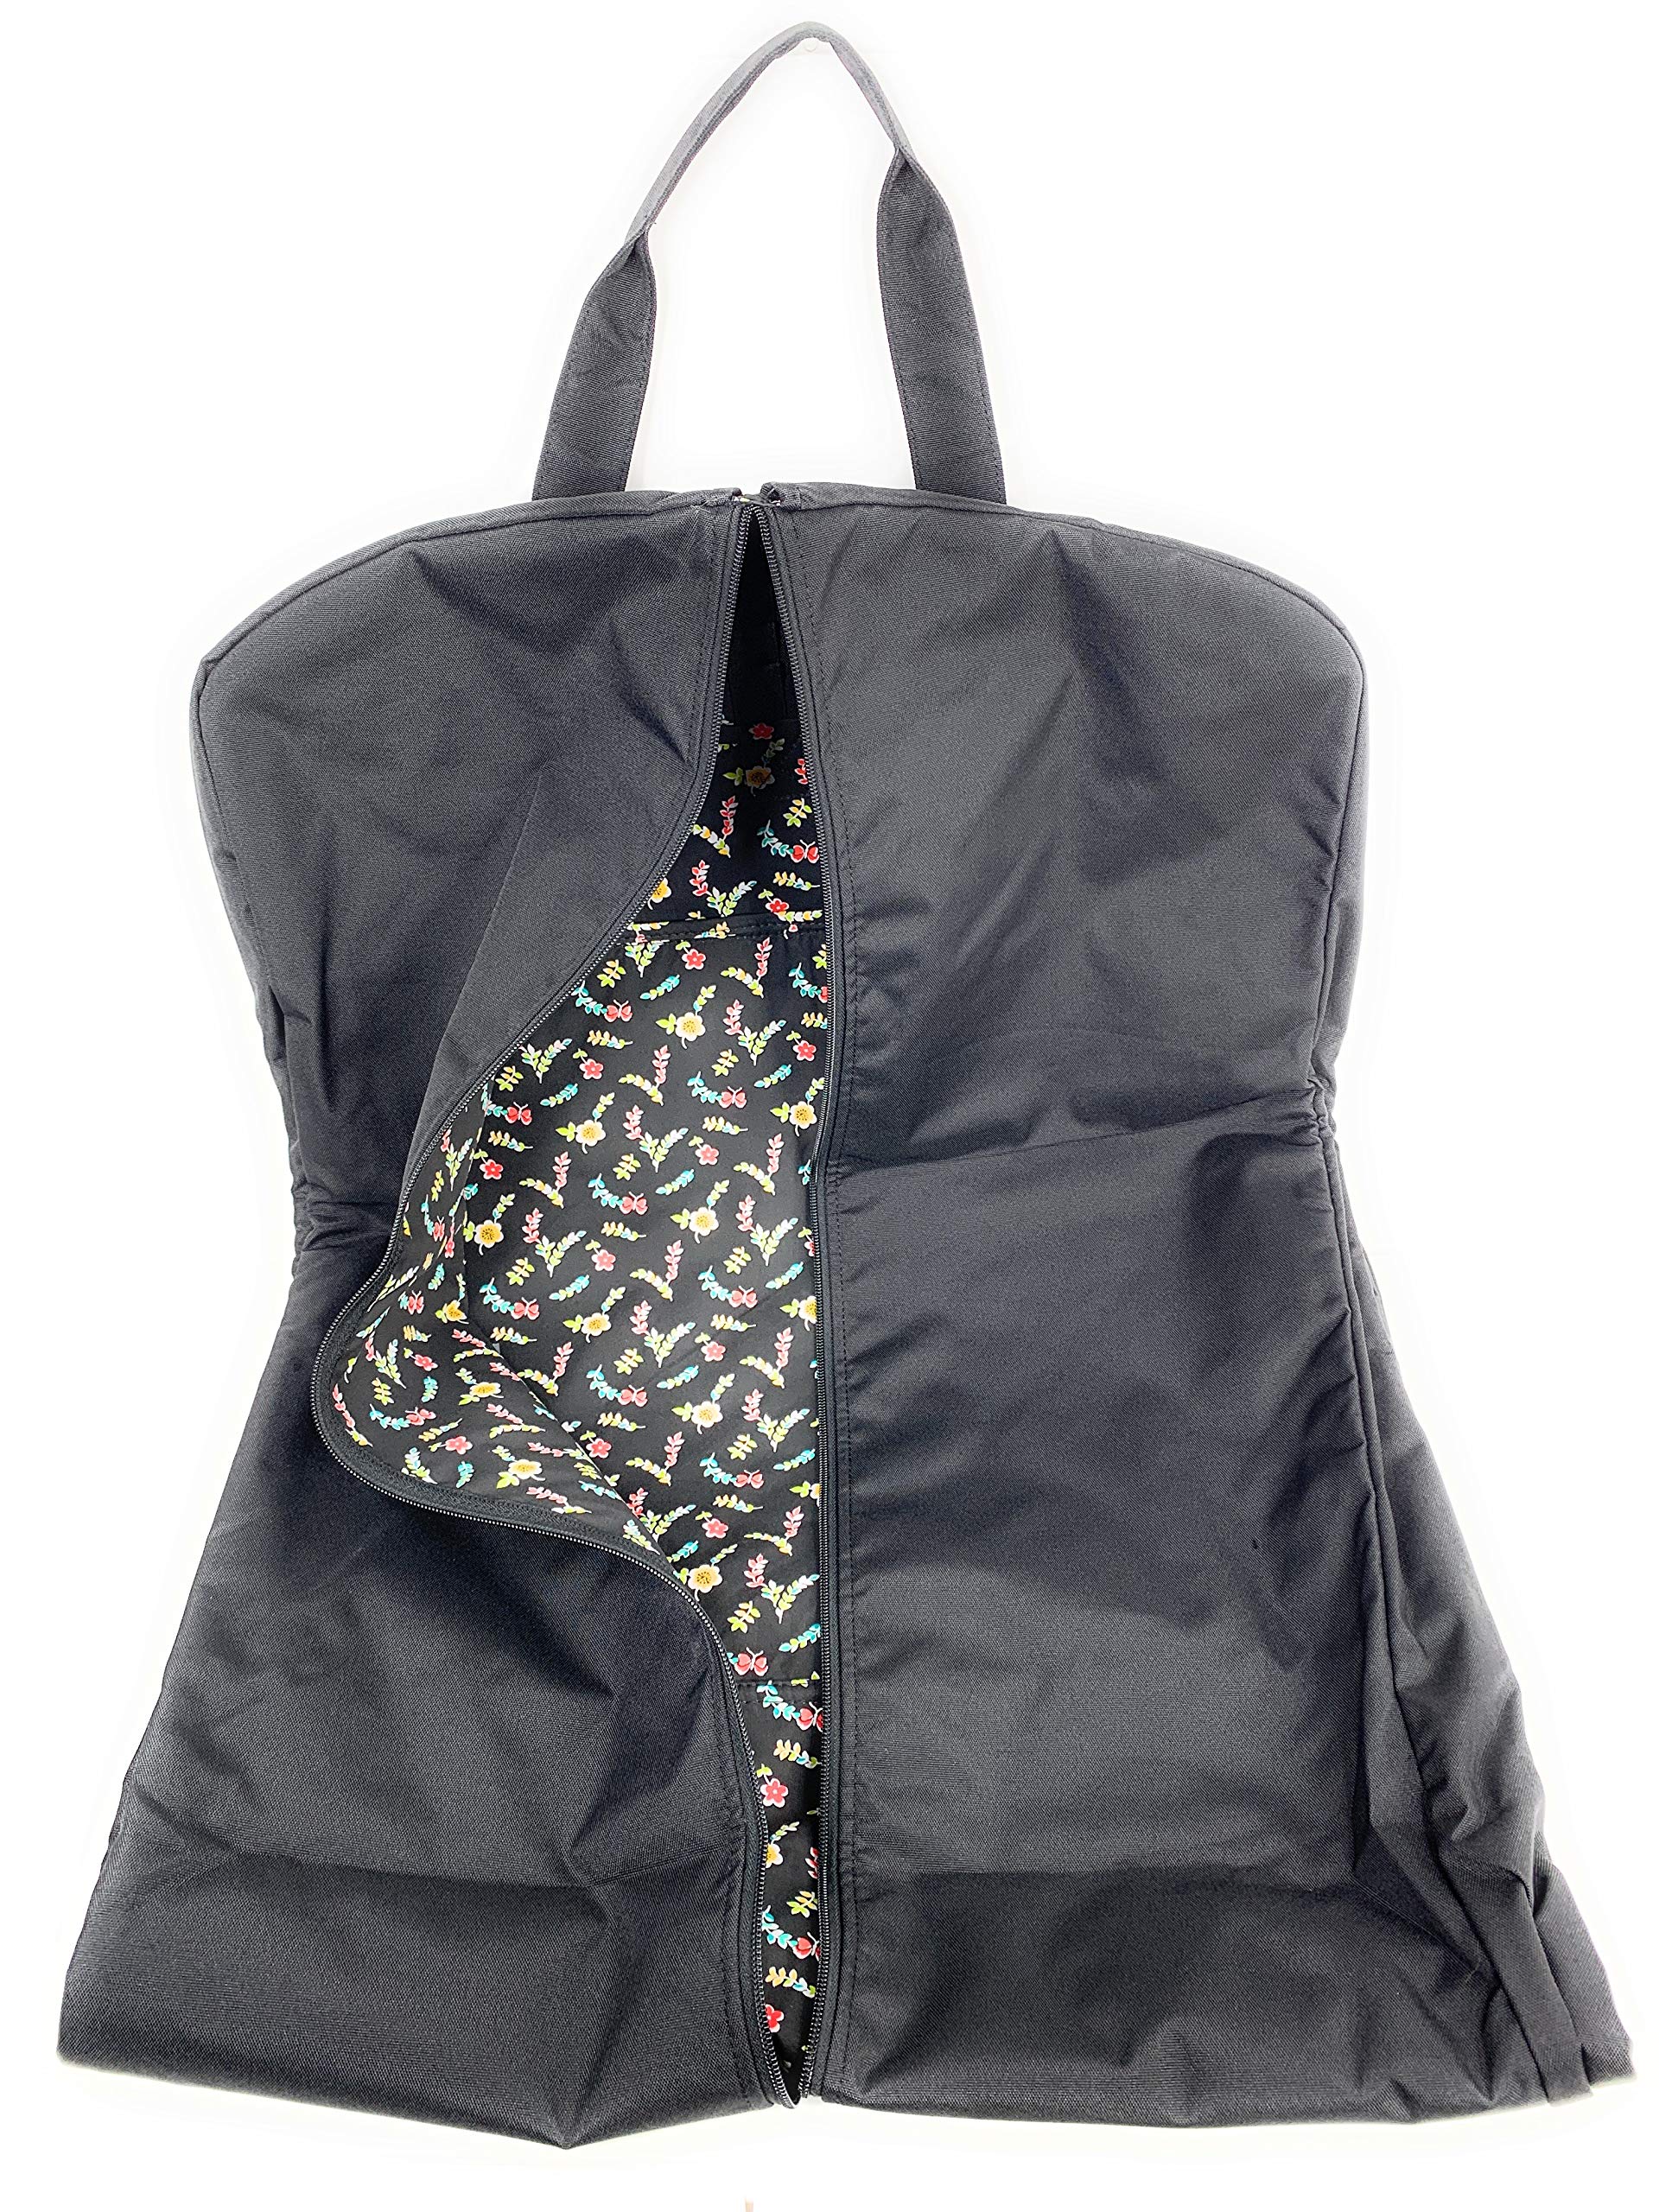 Vera Bradley Lighten Up garment Bag Black With Floral Interior